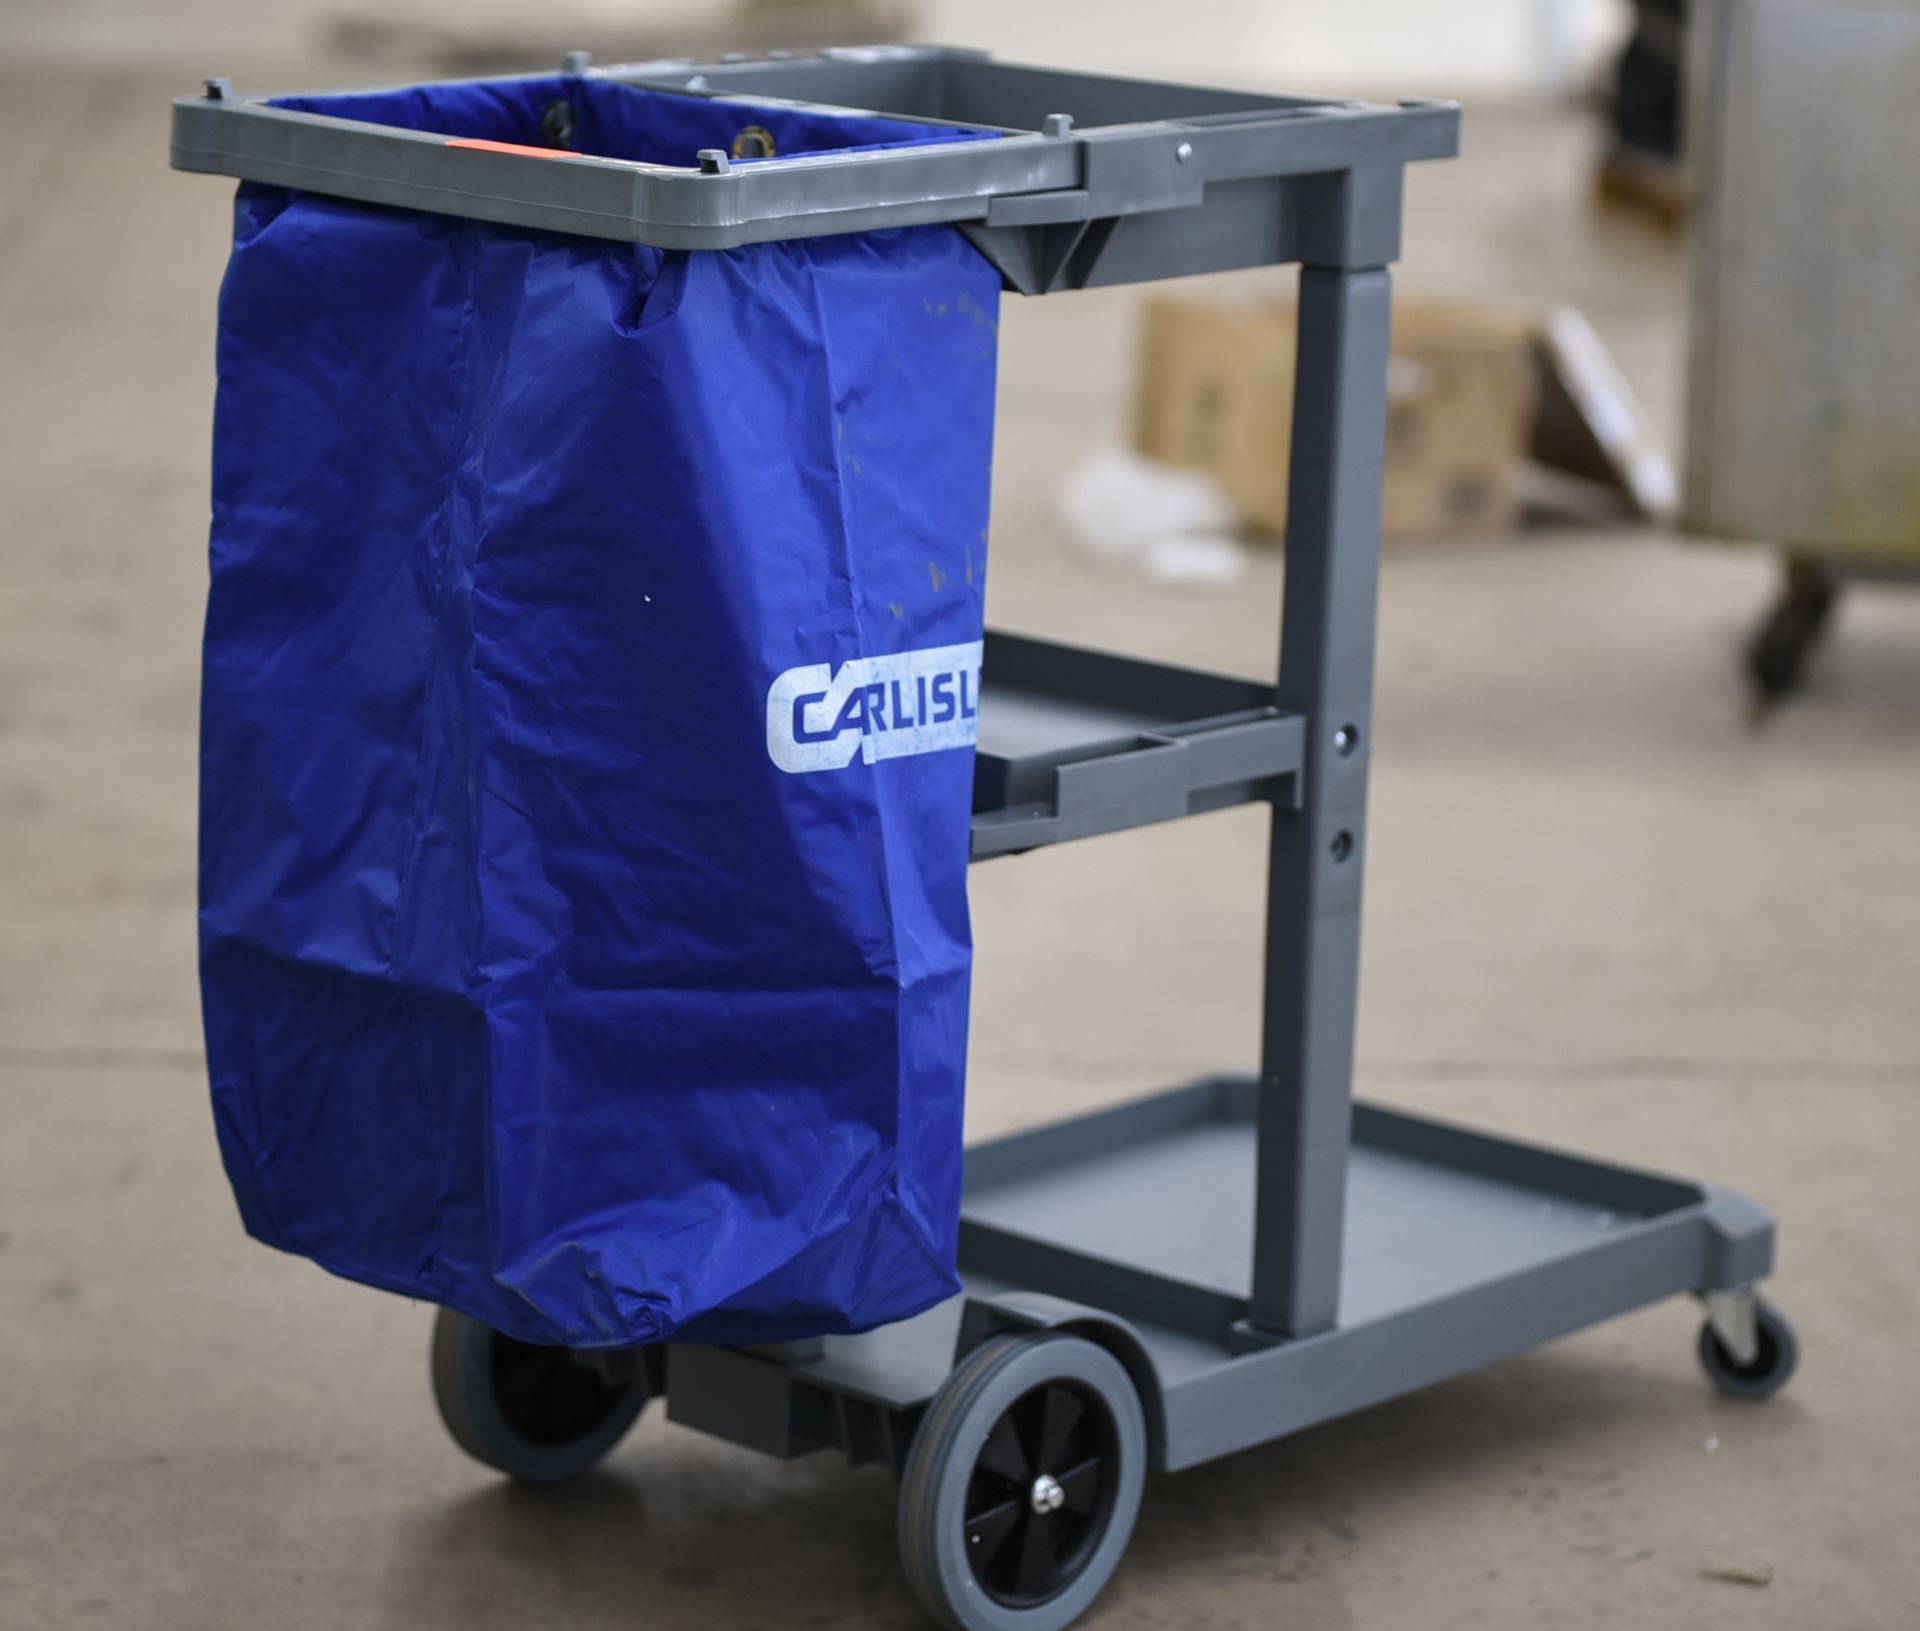 New Carlisle Janitor Cart - Image 2 of 2